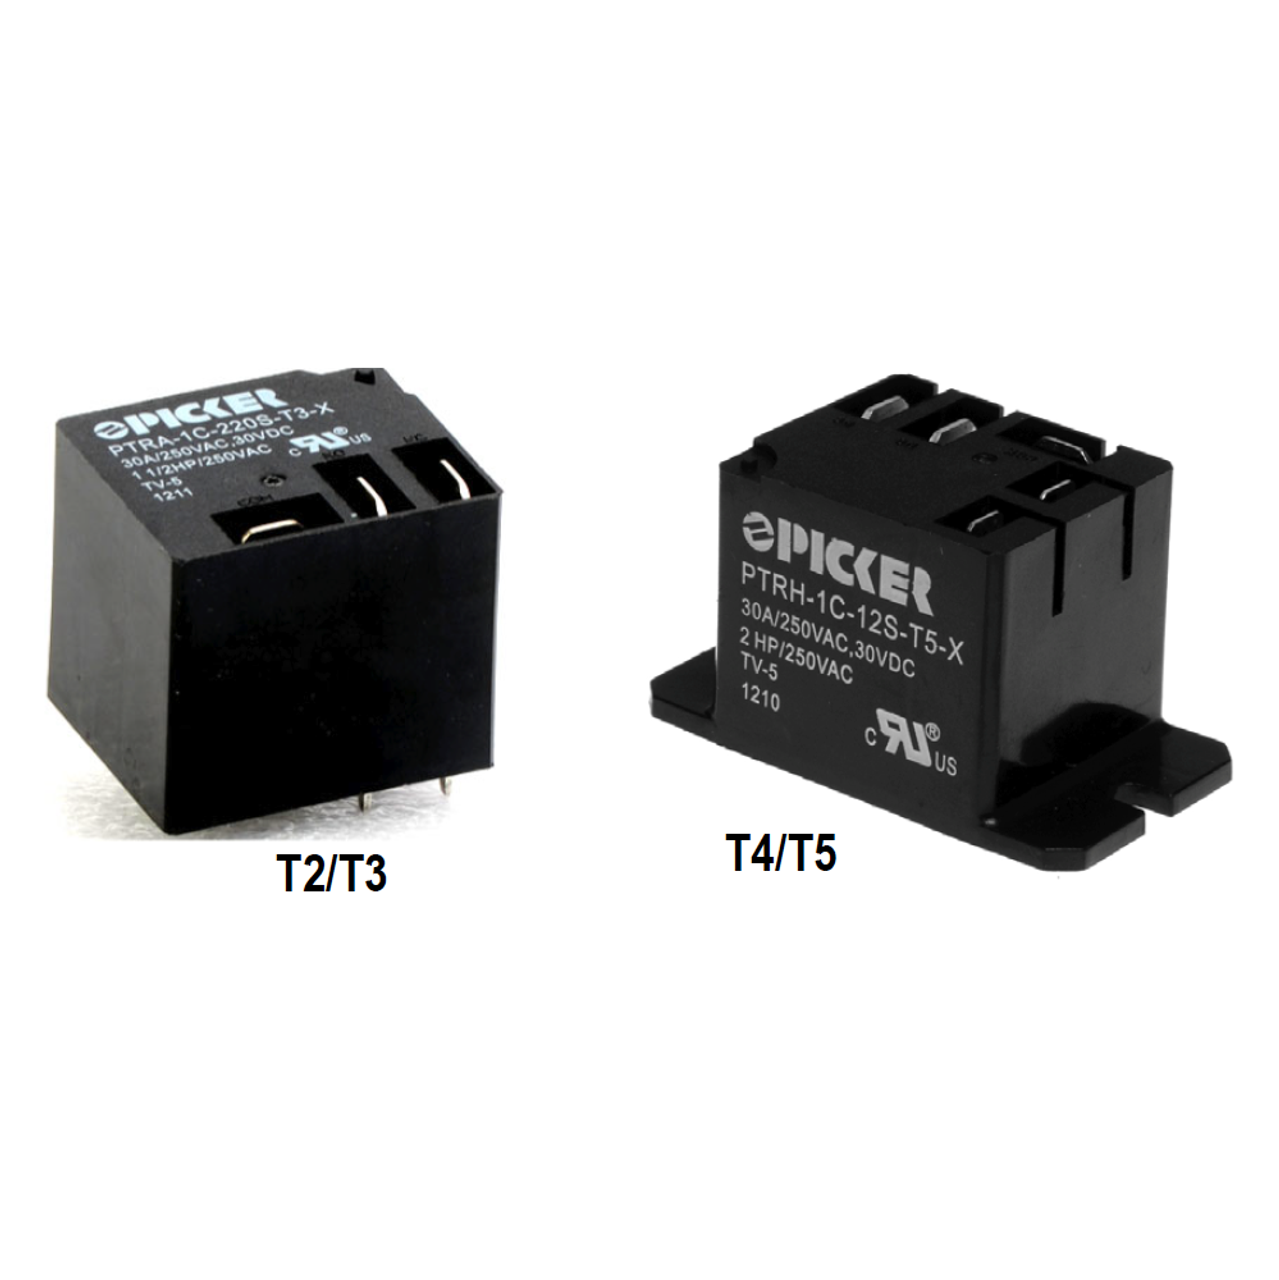 Picker PTRH-1C-110SF-T4-X67A Power Relays